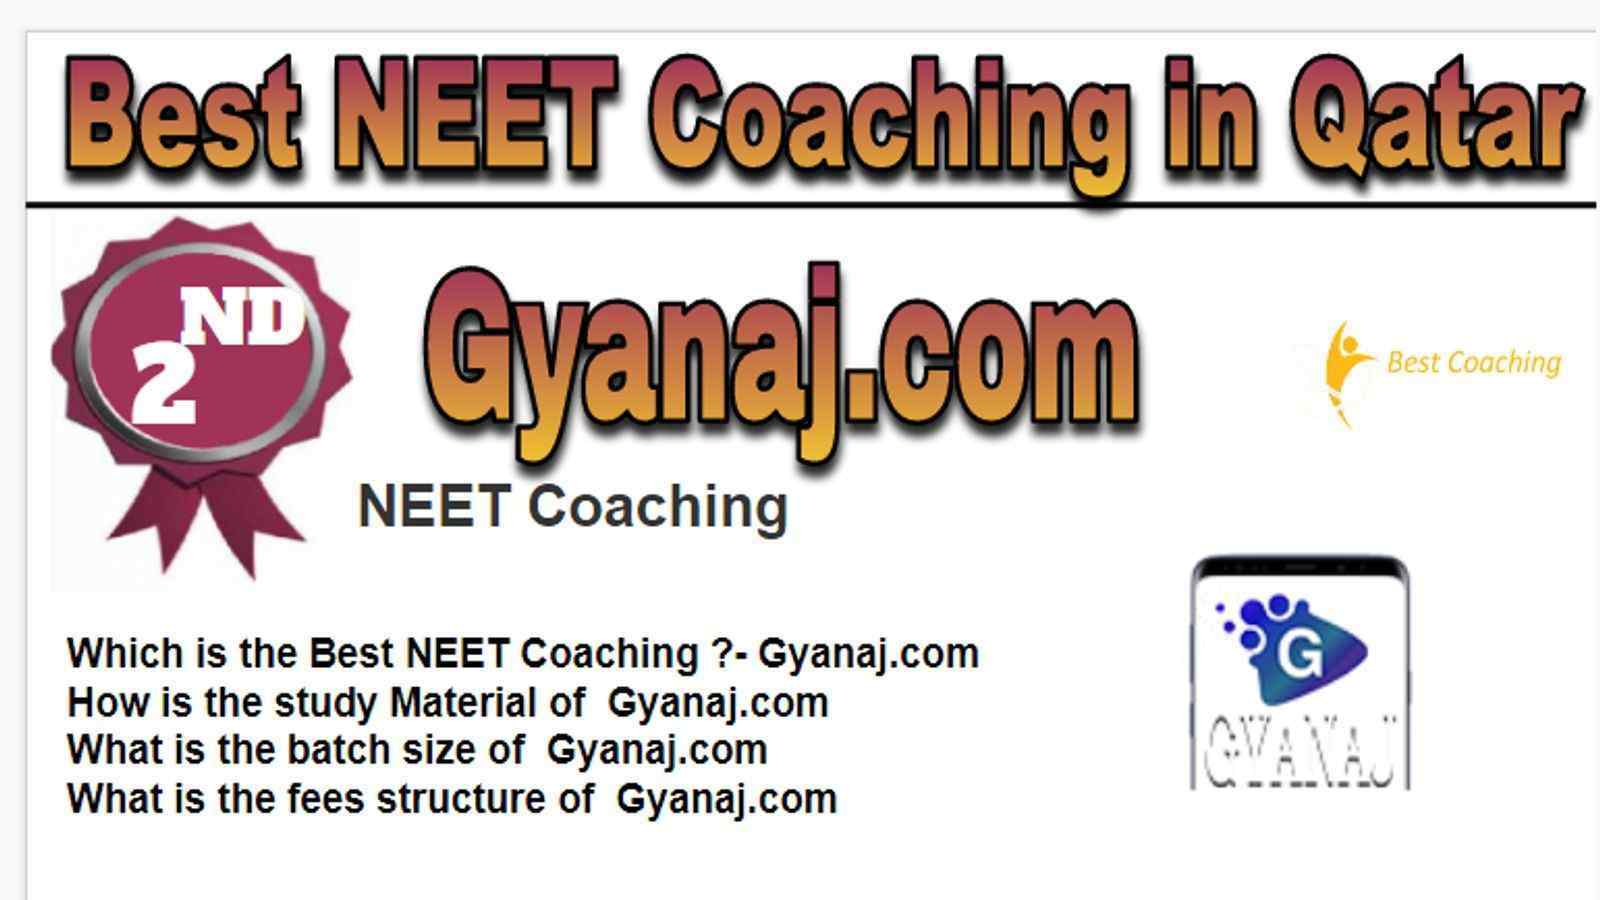 Rank 2 Best NEET Coaching in Qatar